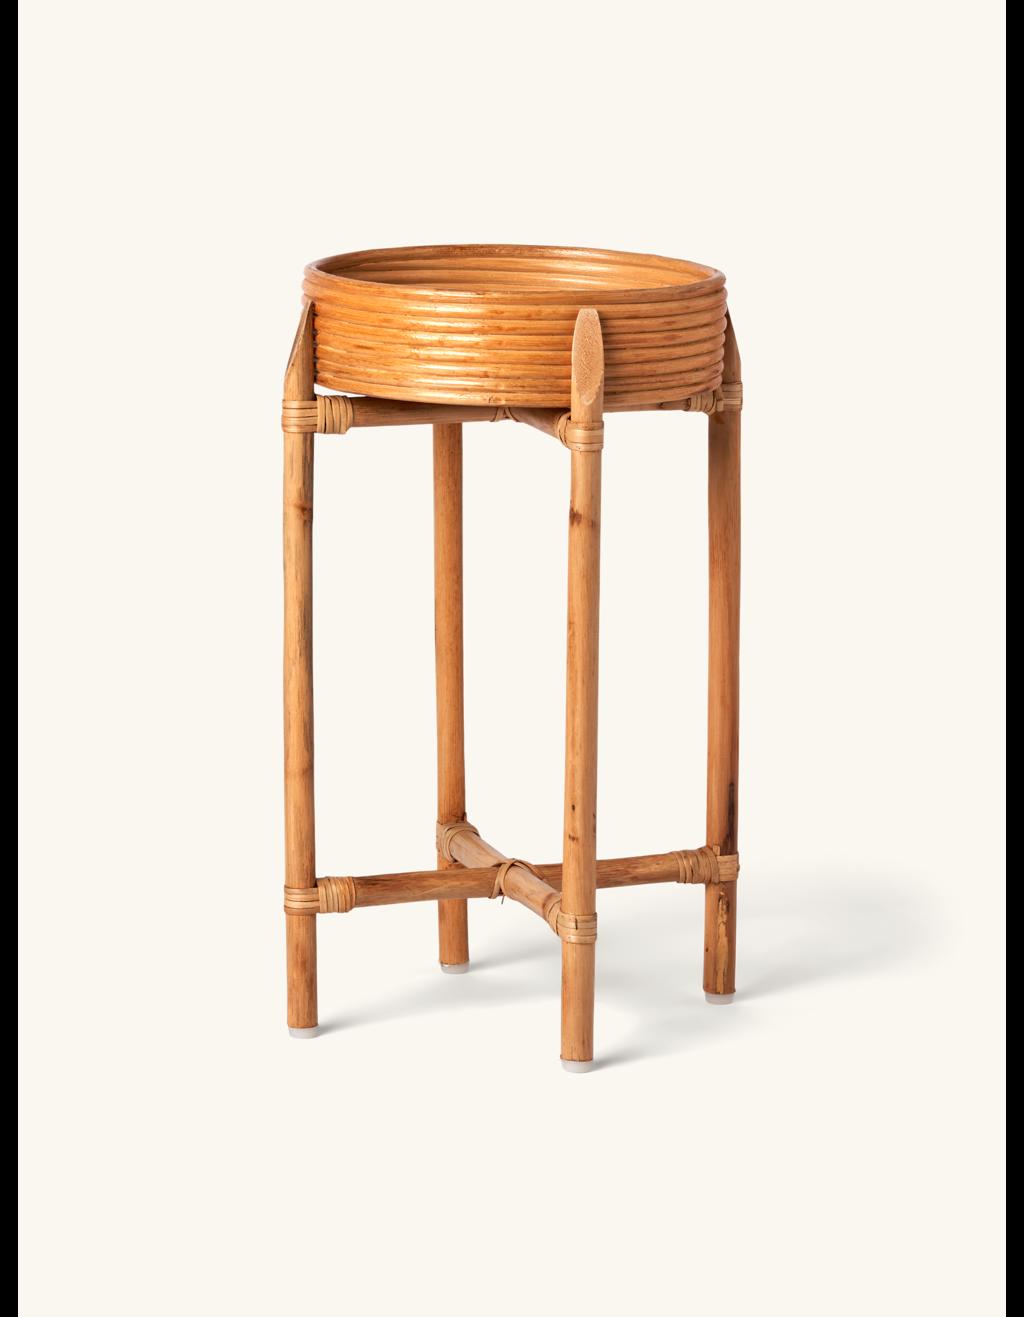 Home - Plant table - Rattan/acacia wood. 27 x 47 cm.